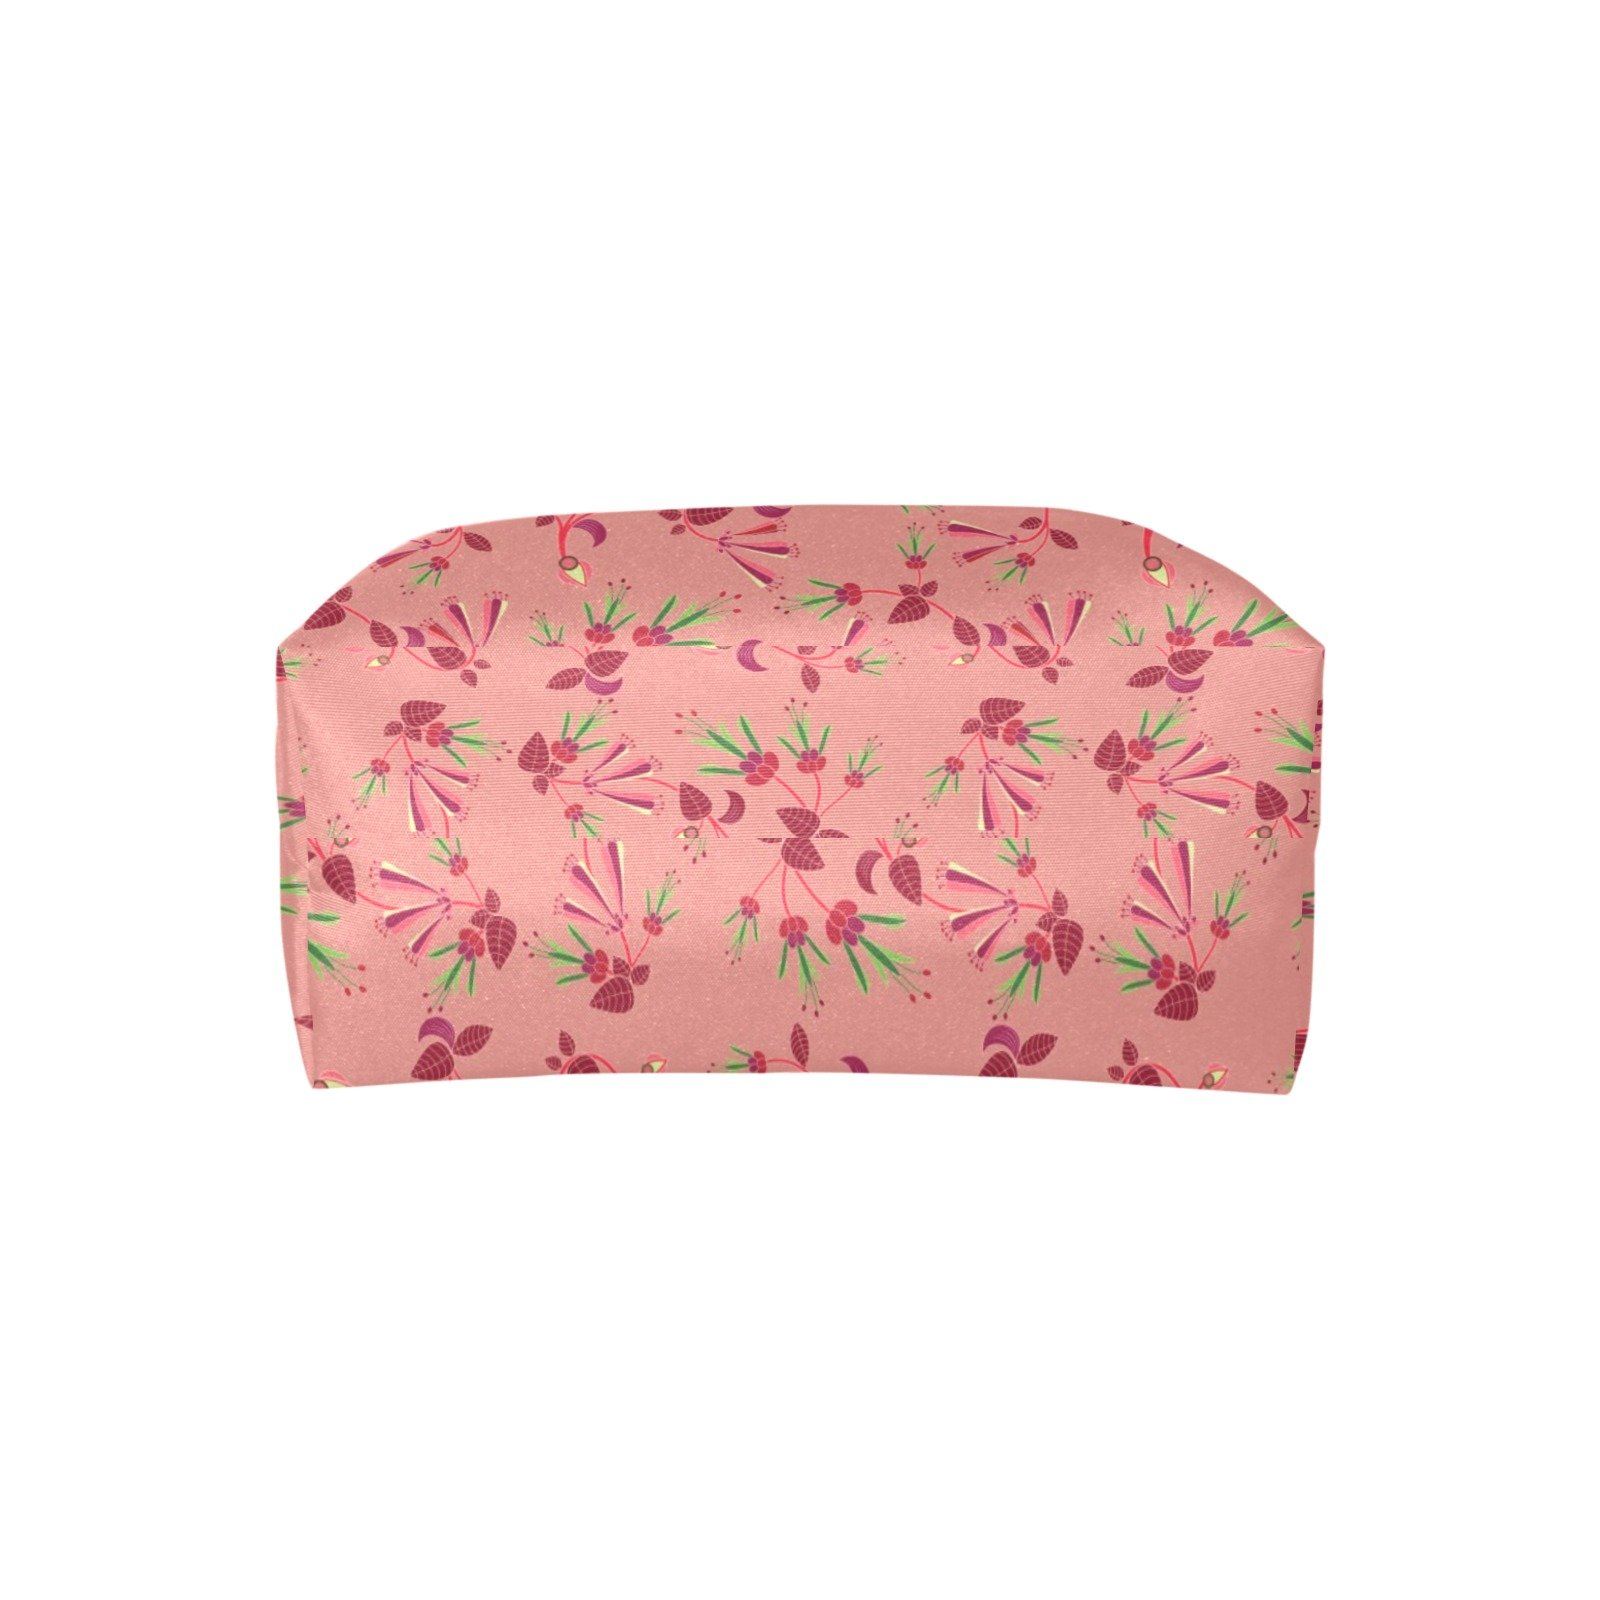 Swift Floral Peach Rouge Remix Single-Shoulder Lady Handbag (Model 1714) bag e-joyer 